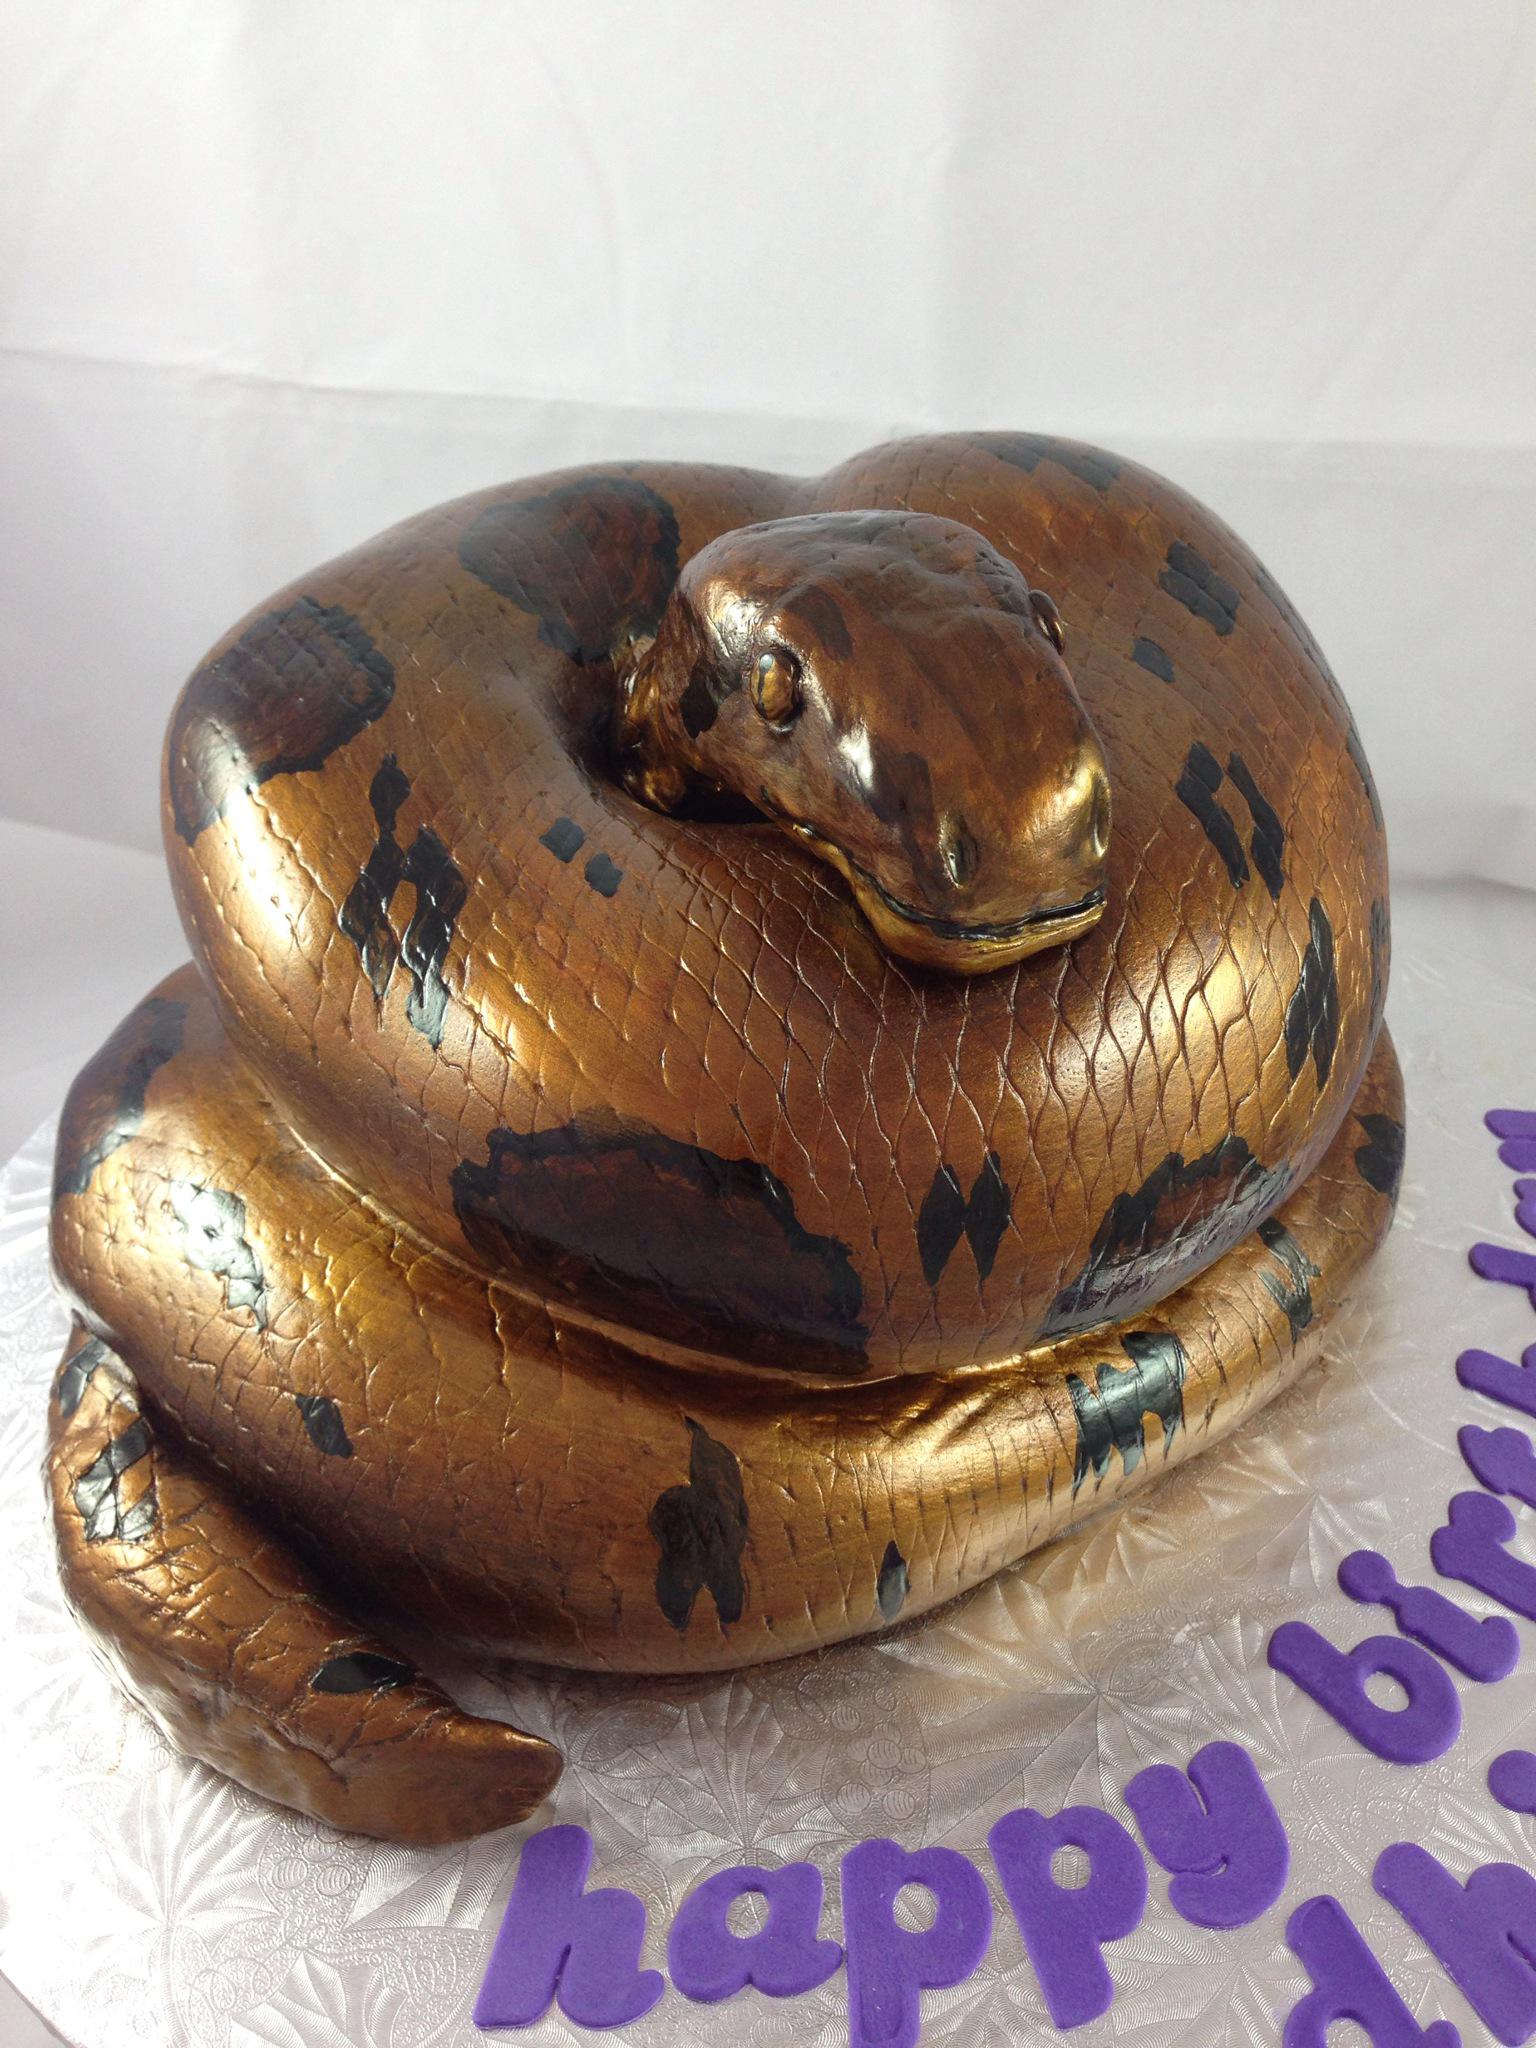 Boa Snake Cake